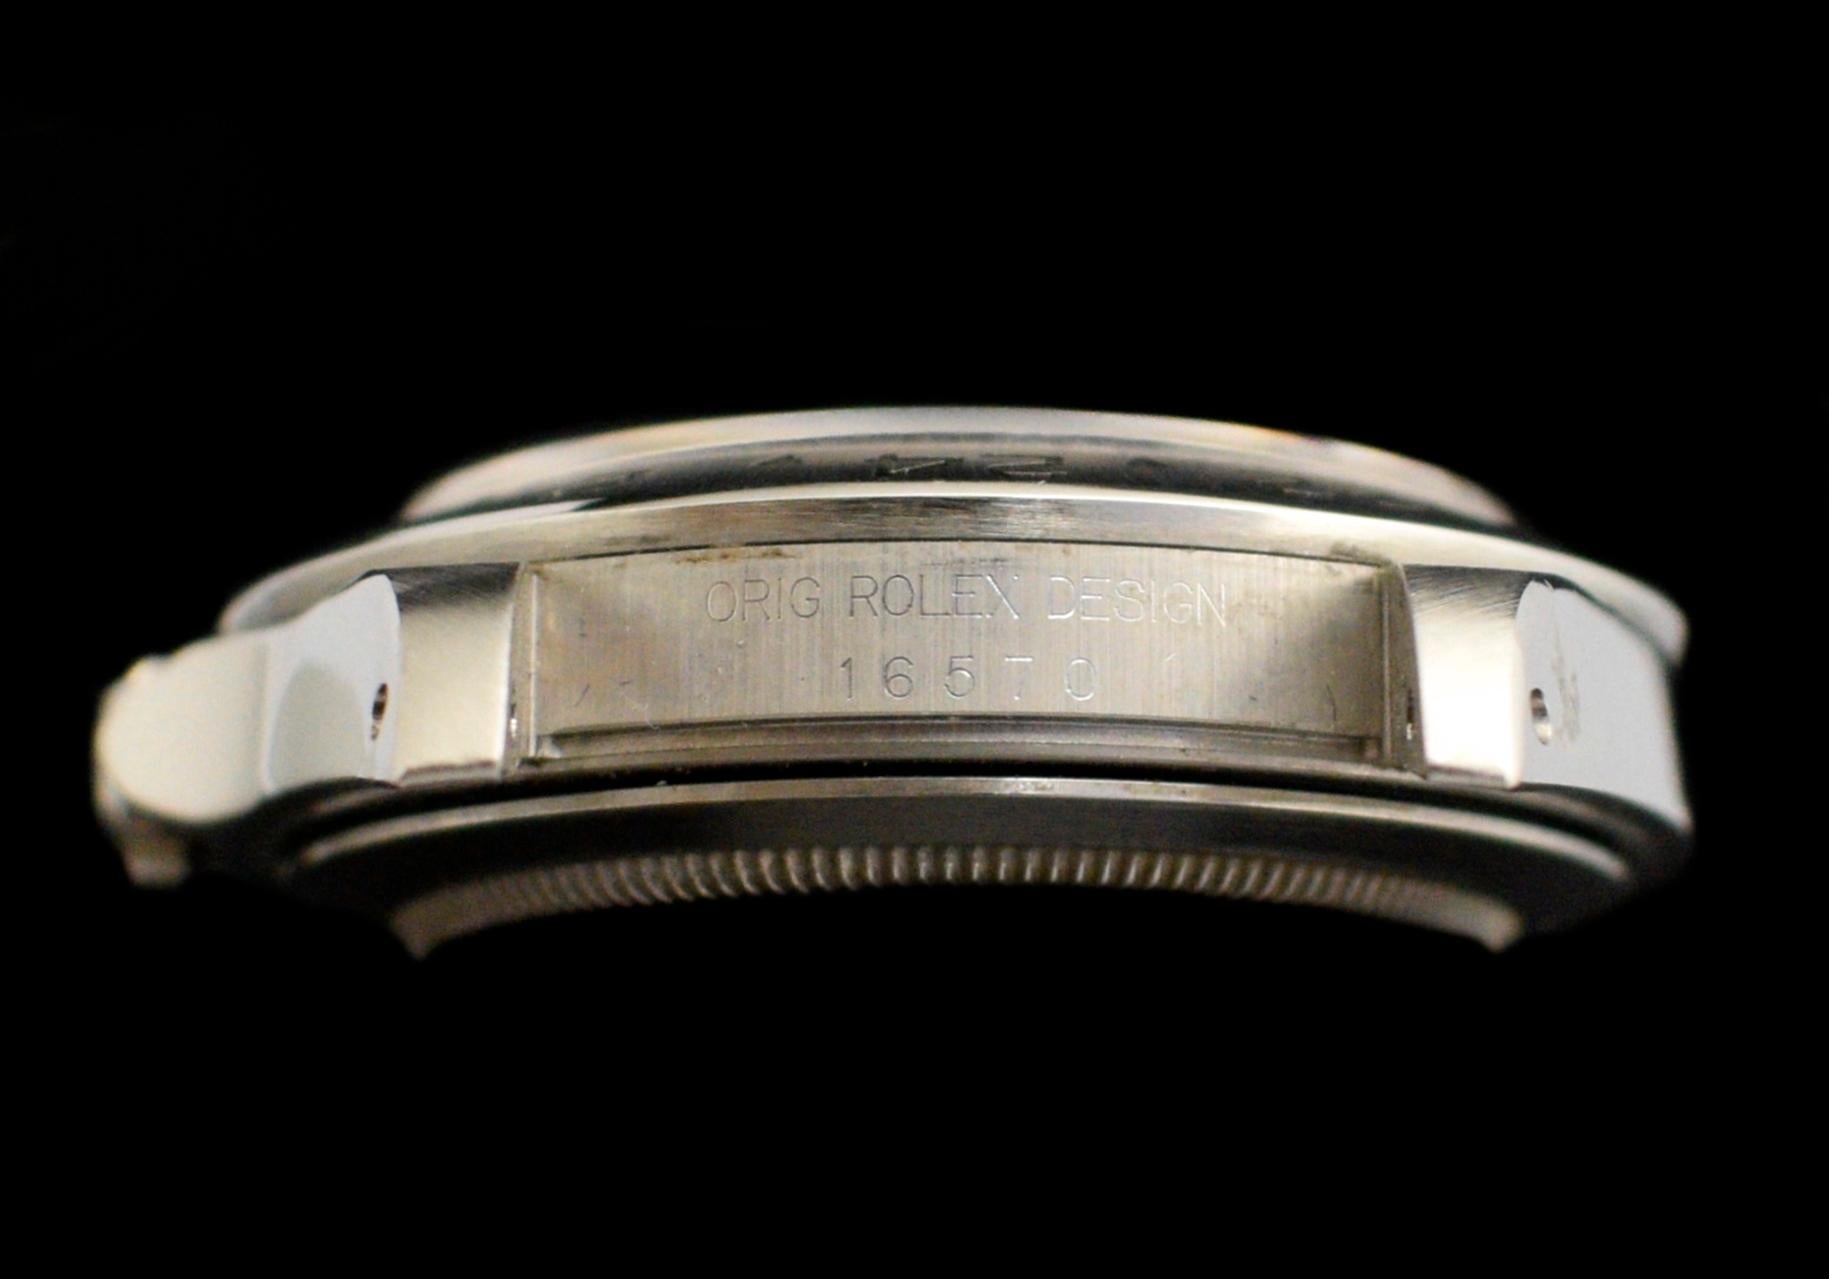 Rolex Explorer II Black Dial 16570 Steel Automatic Watch 1993 For Sale 1